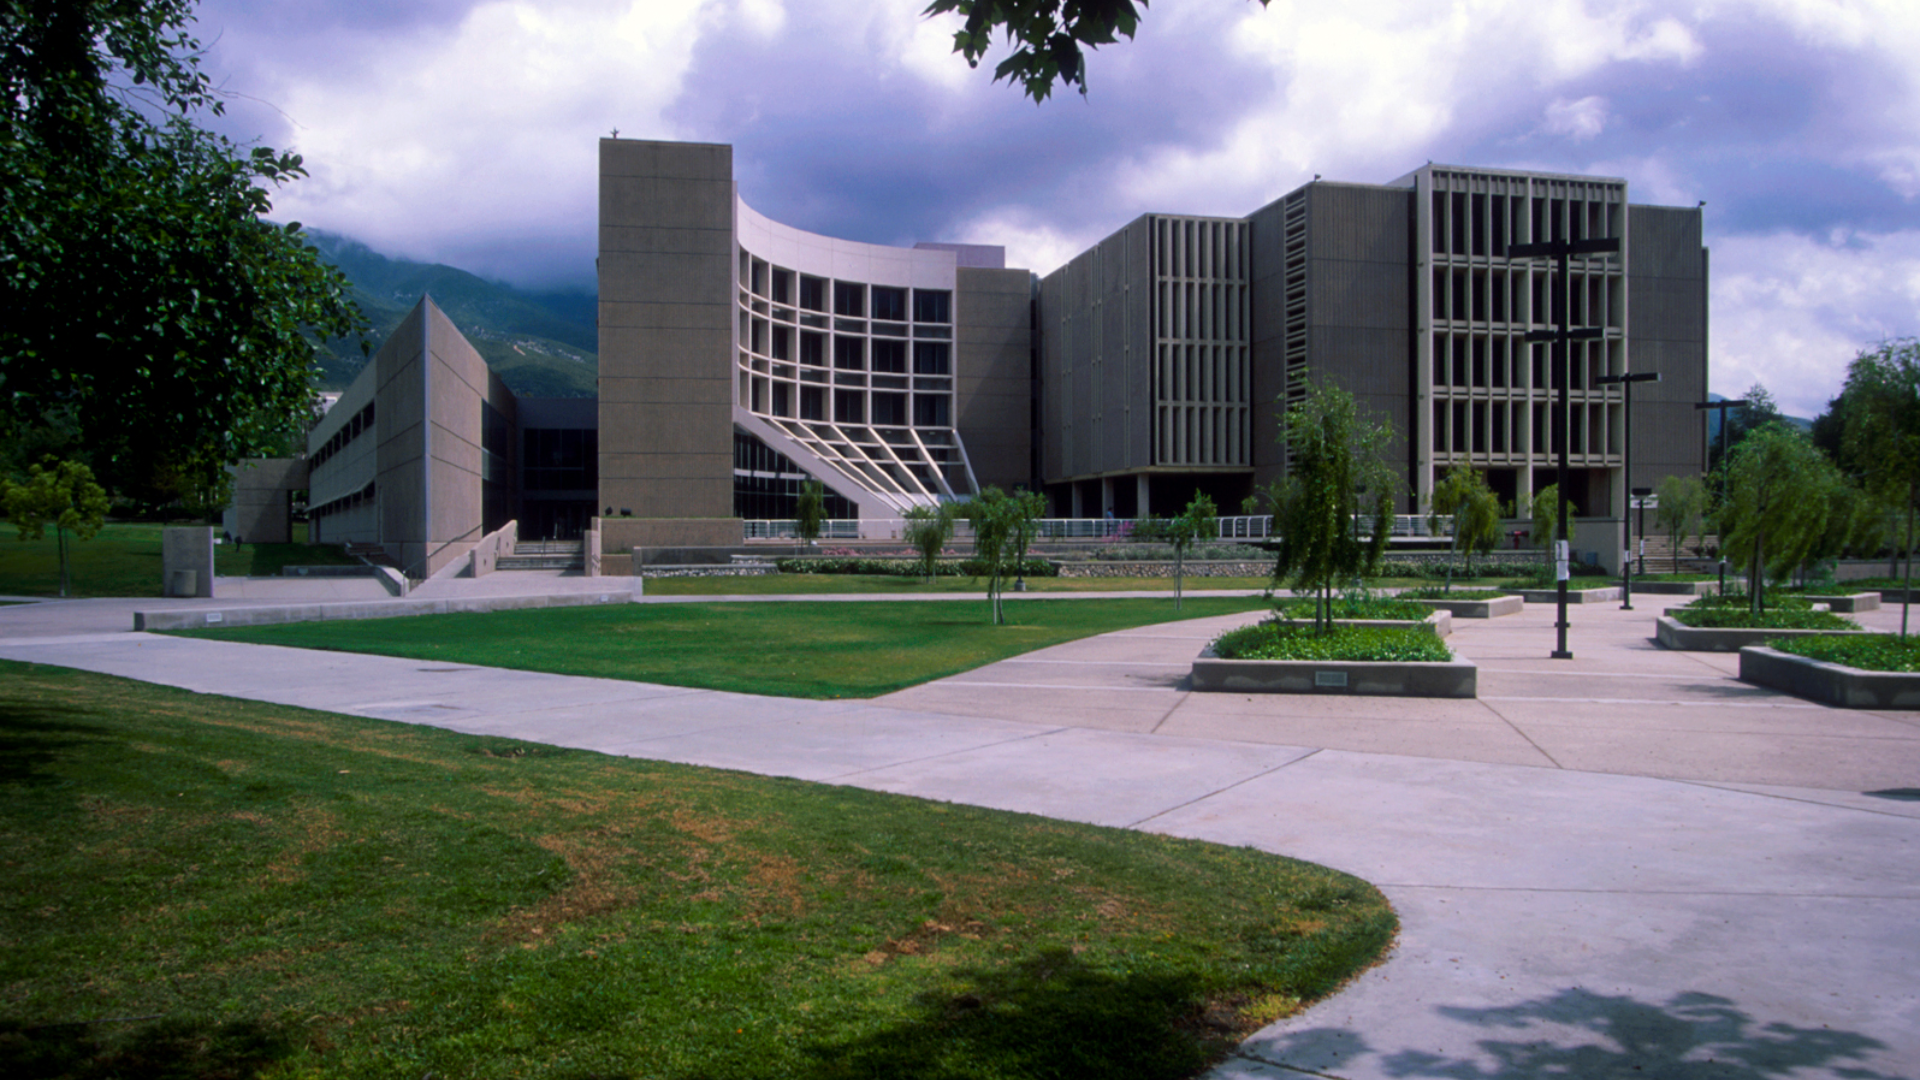 Image of the main campus of Cal State University's San Bernadino location.